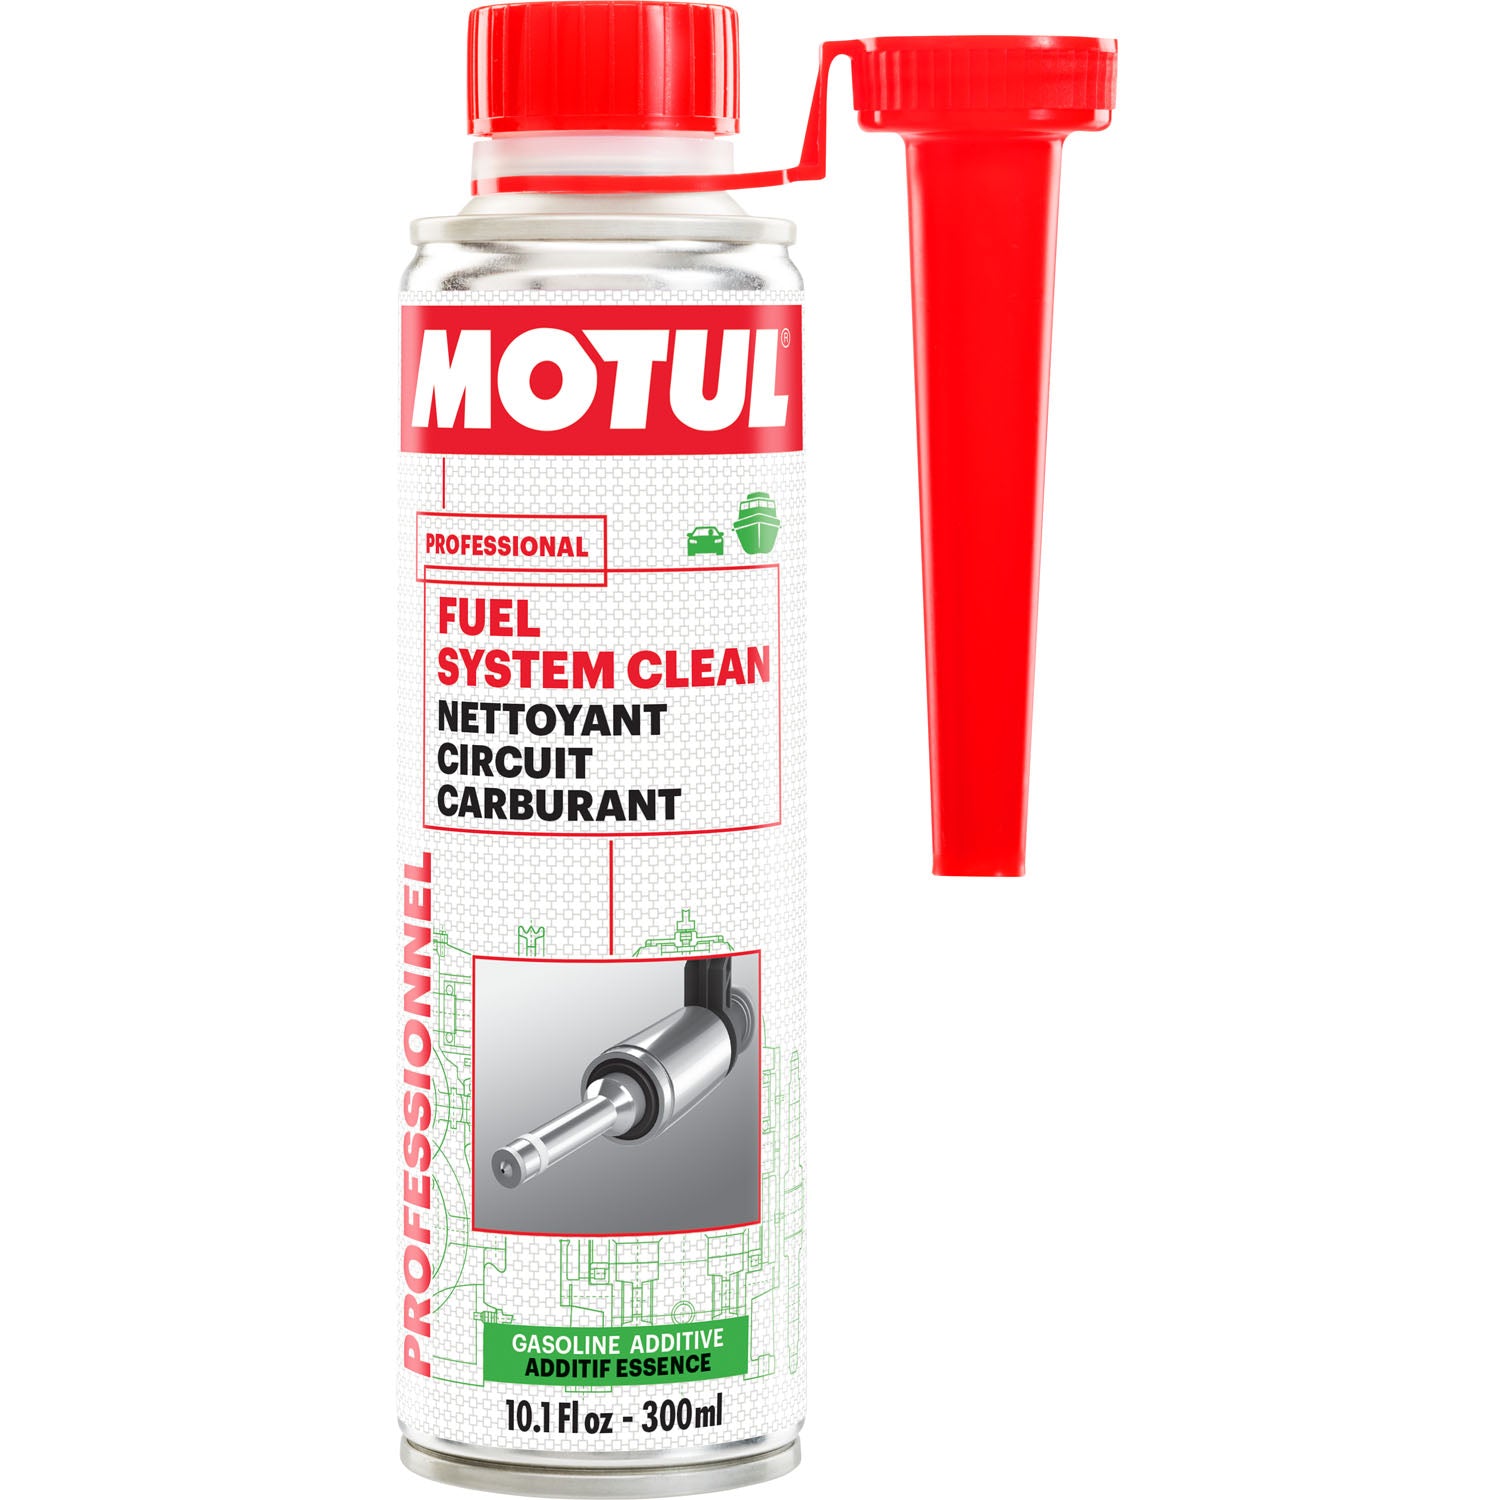 Motul Professional Fuel System Clean Gasoline Additive - 300ml